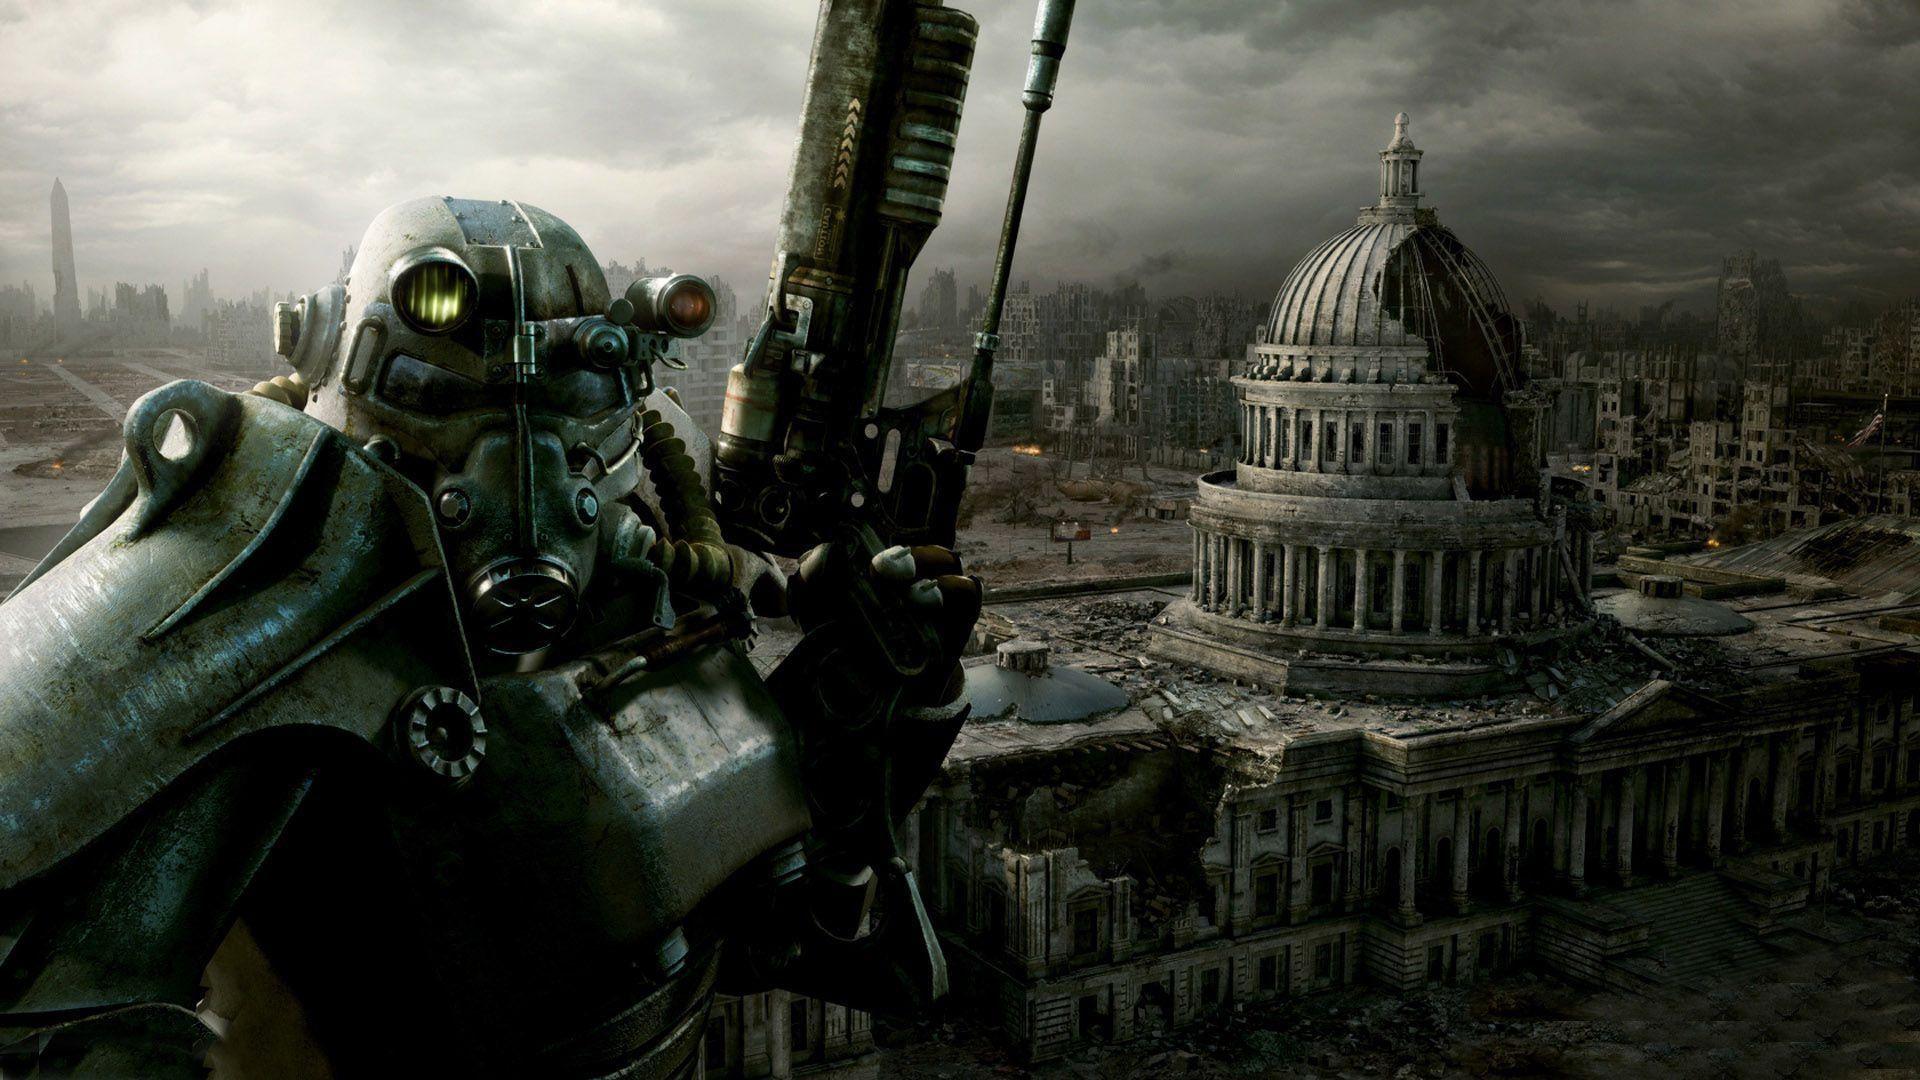 Wallpaper.wiki Fallout Fallout 3 Brotherhood Of Steel Wallpaper PIC